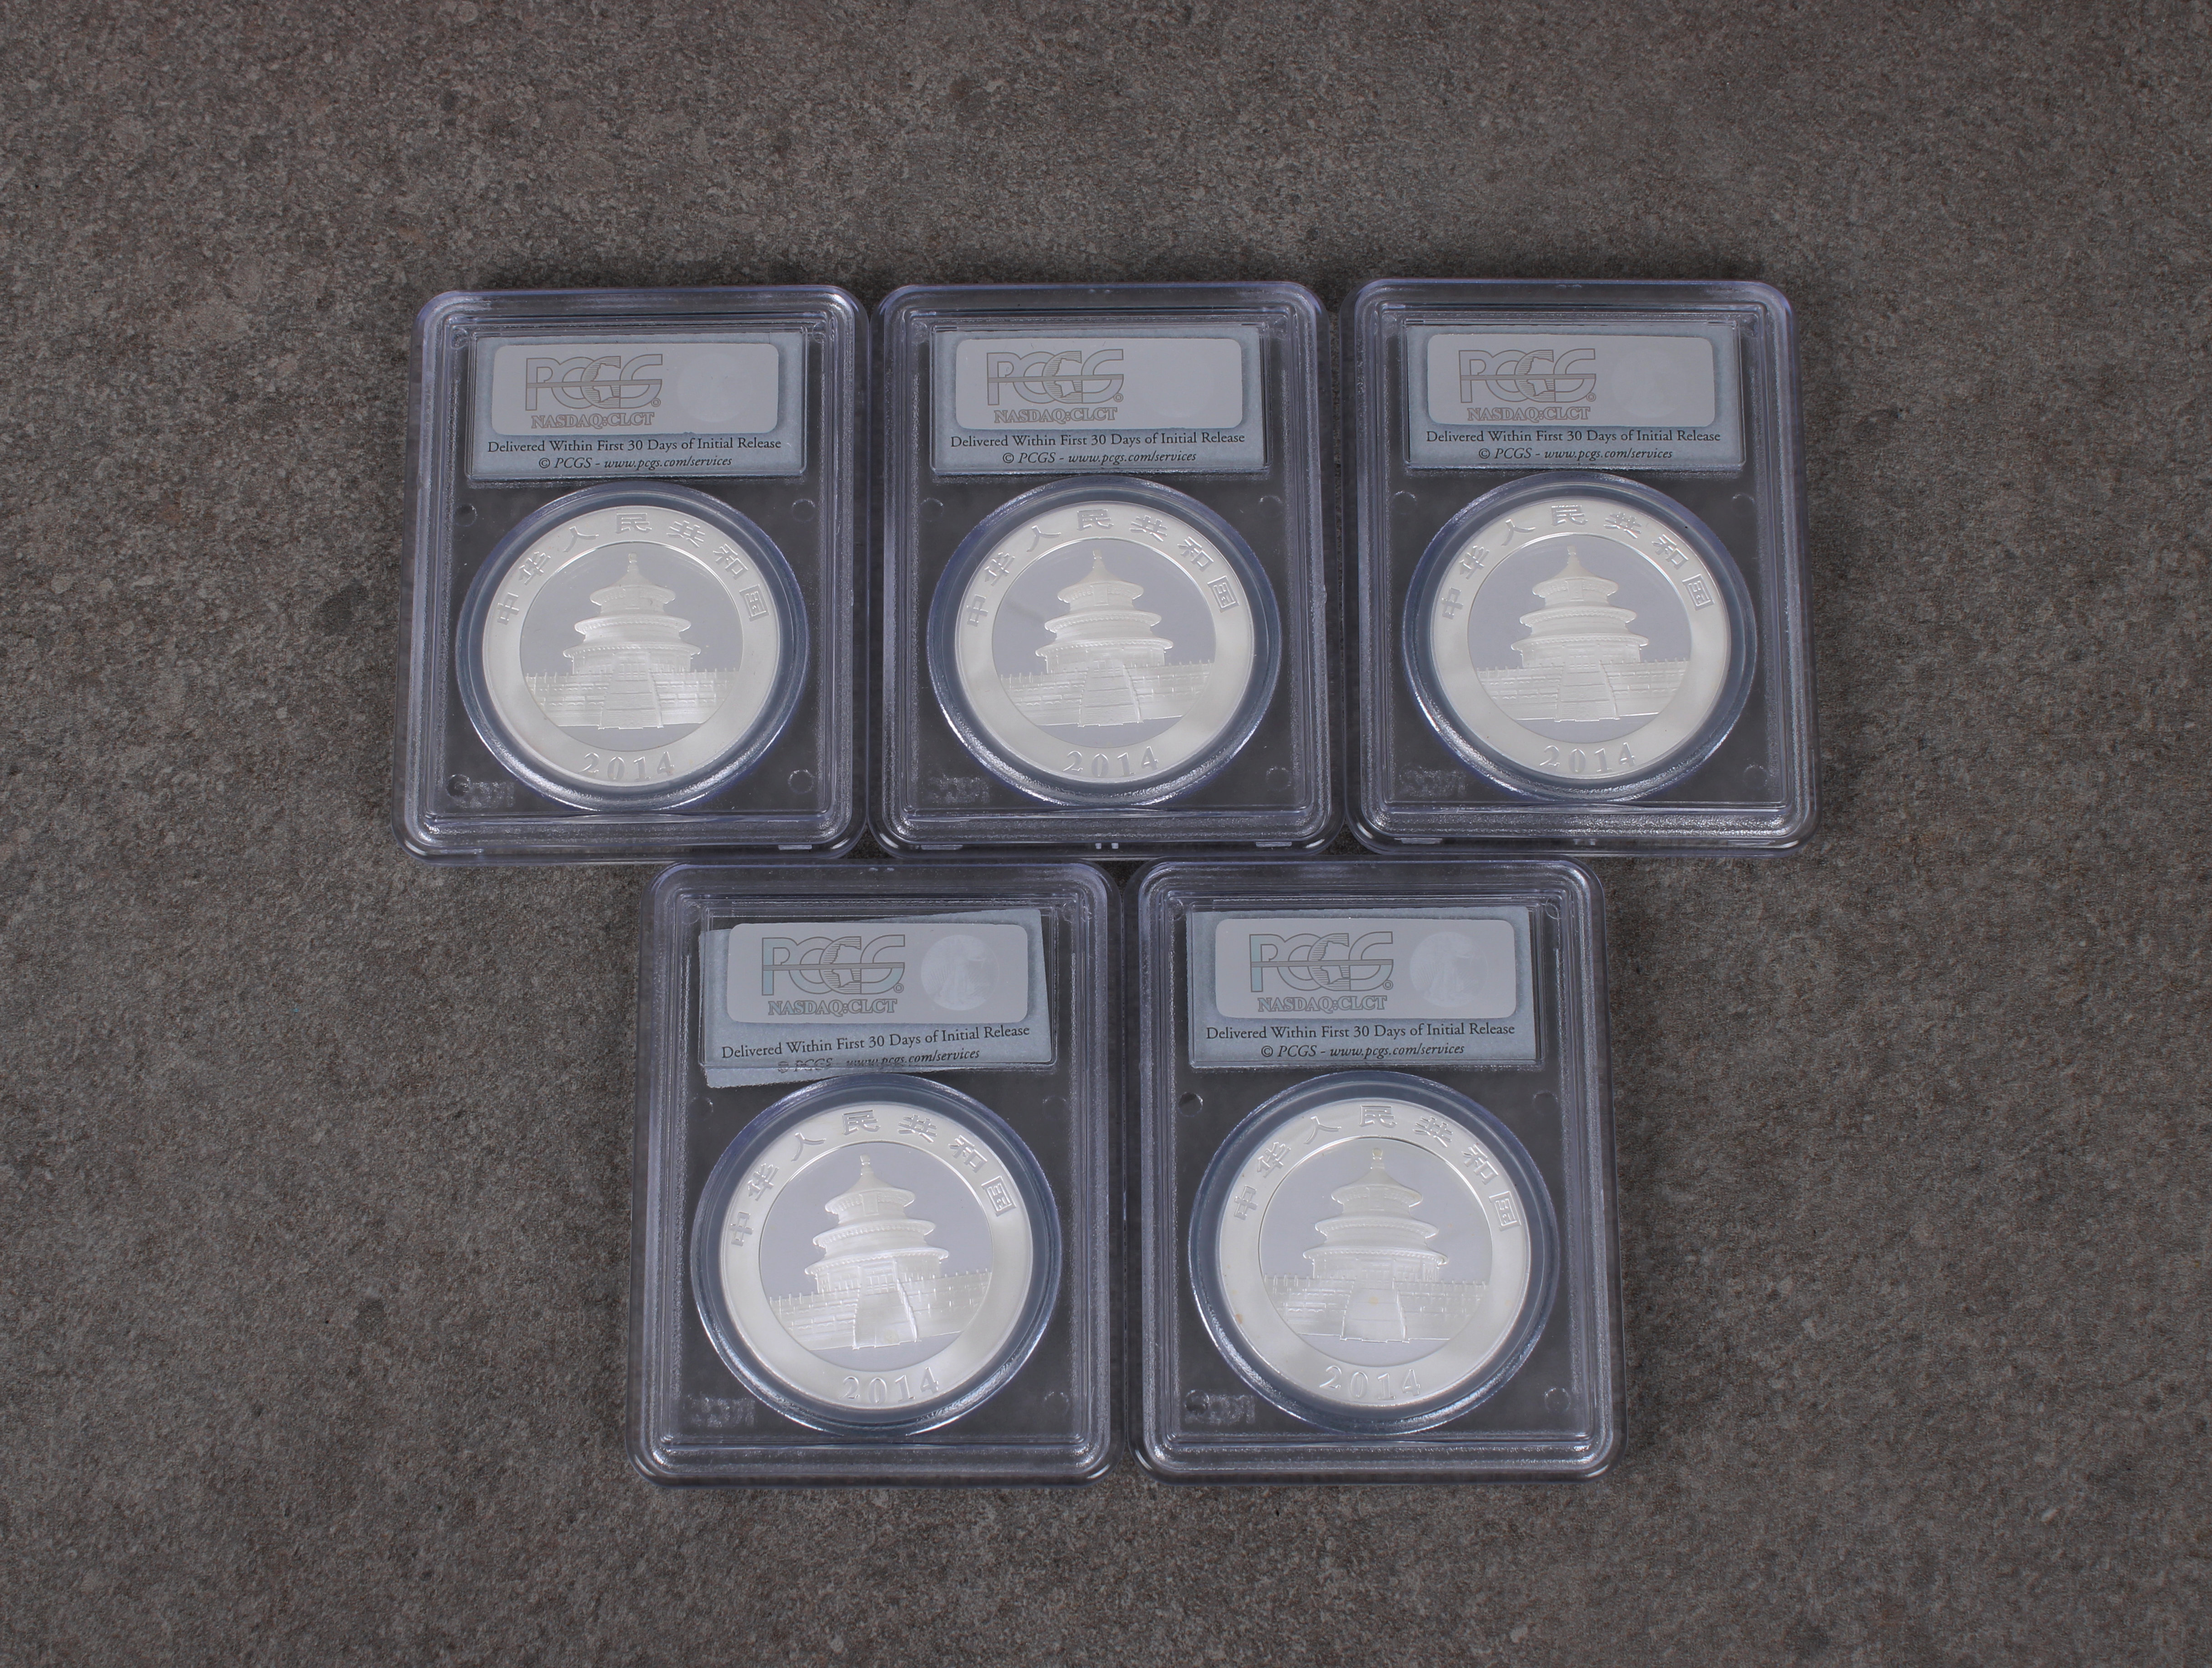 China 5 x 1oz fine silver .999 2014 Panda Ten Yuan coins PSGS graded - Image 2 of 2